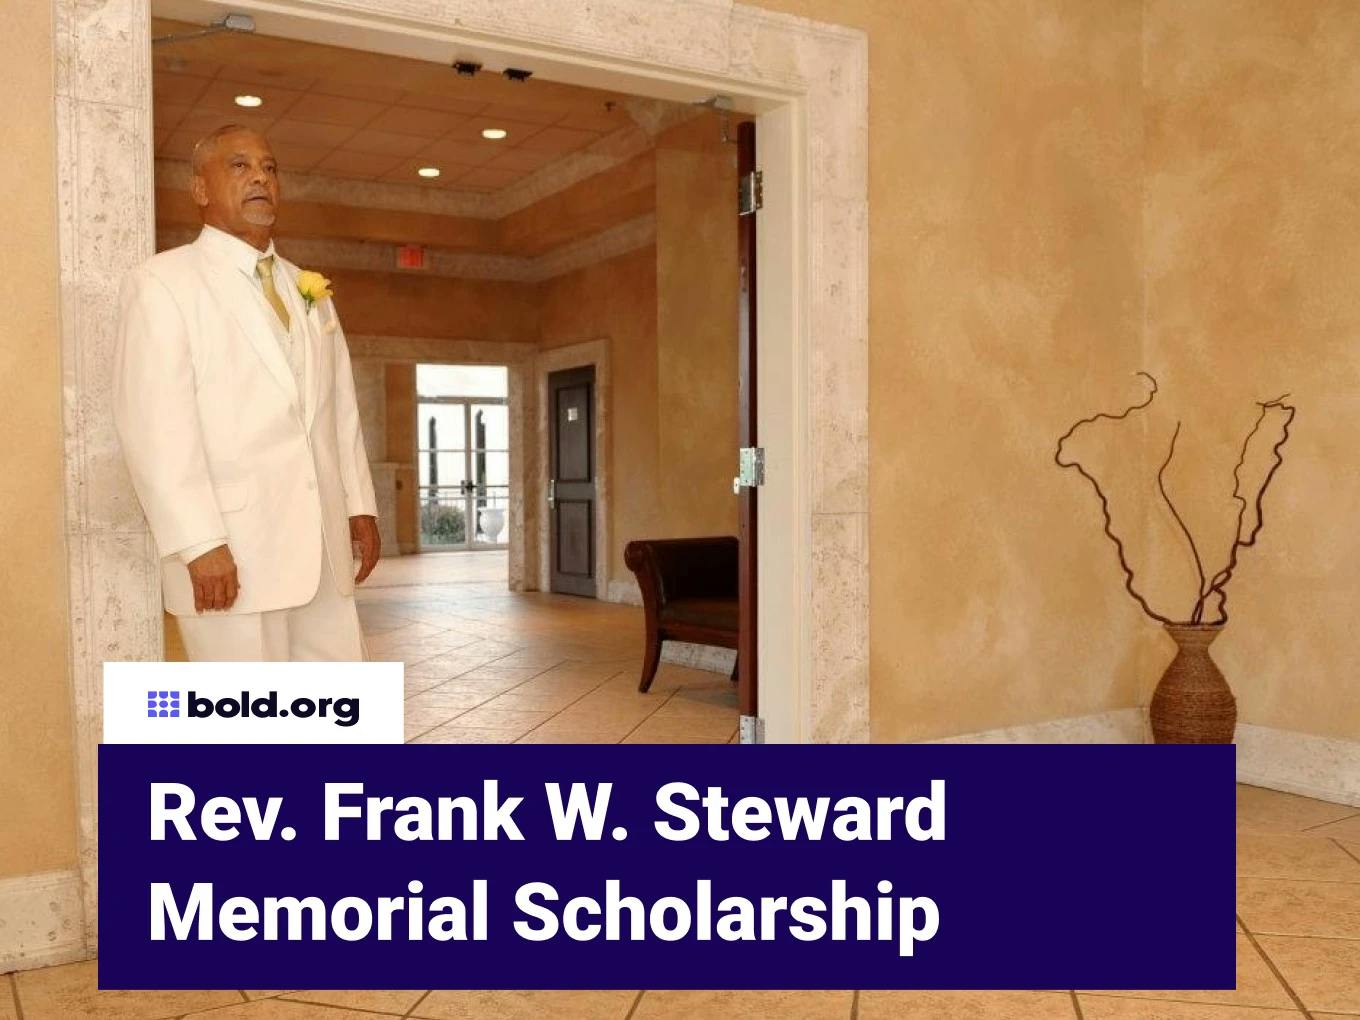 Rev. Frank W. Steward Memorial Scholarship